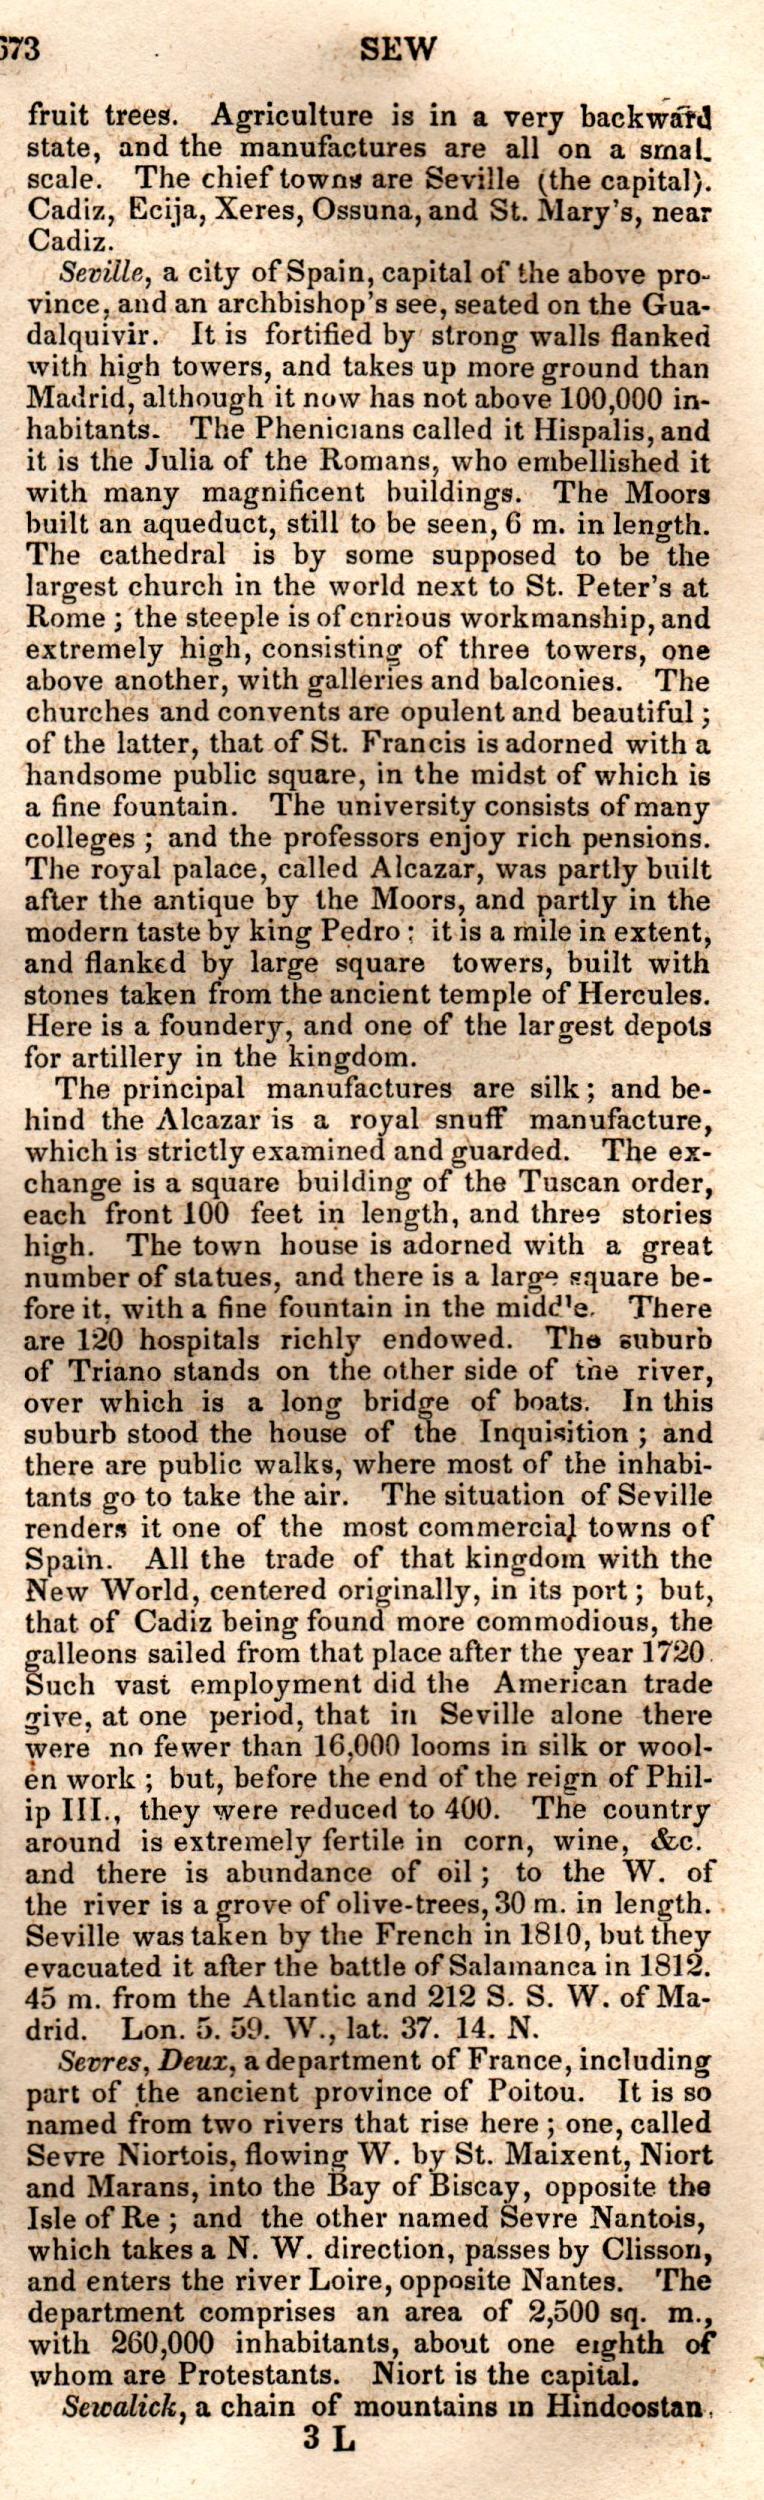 Brookes’ Universal Gazetteer (1850), Page 673 Right Column